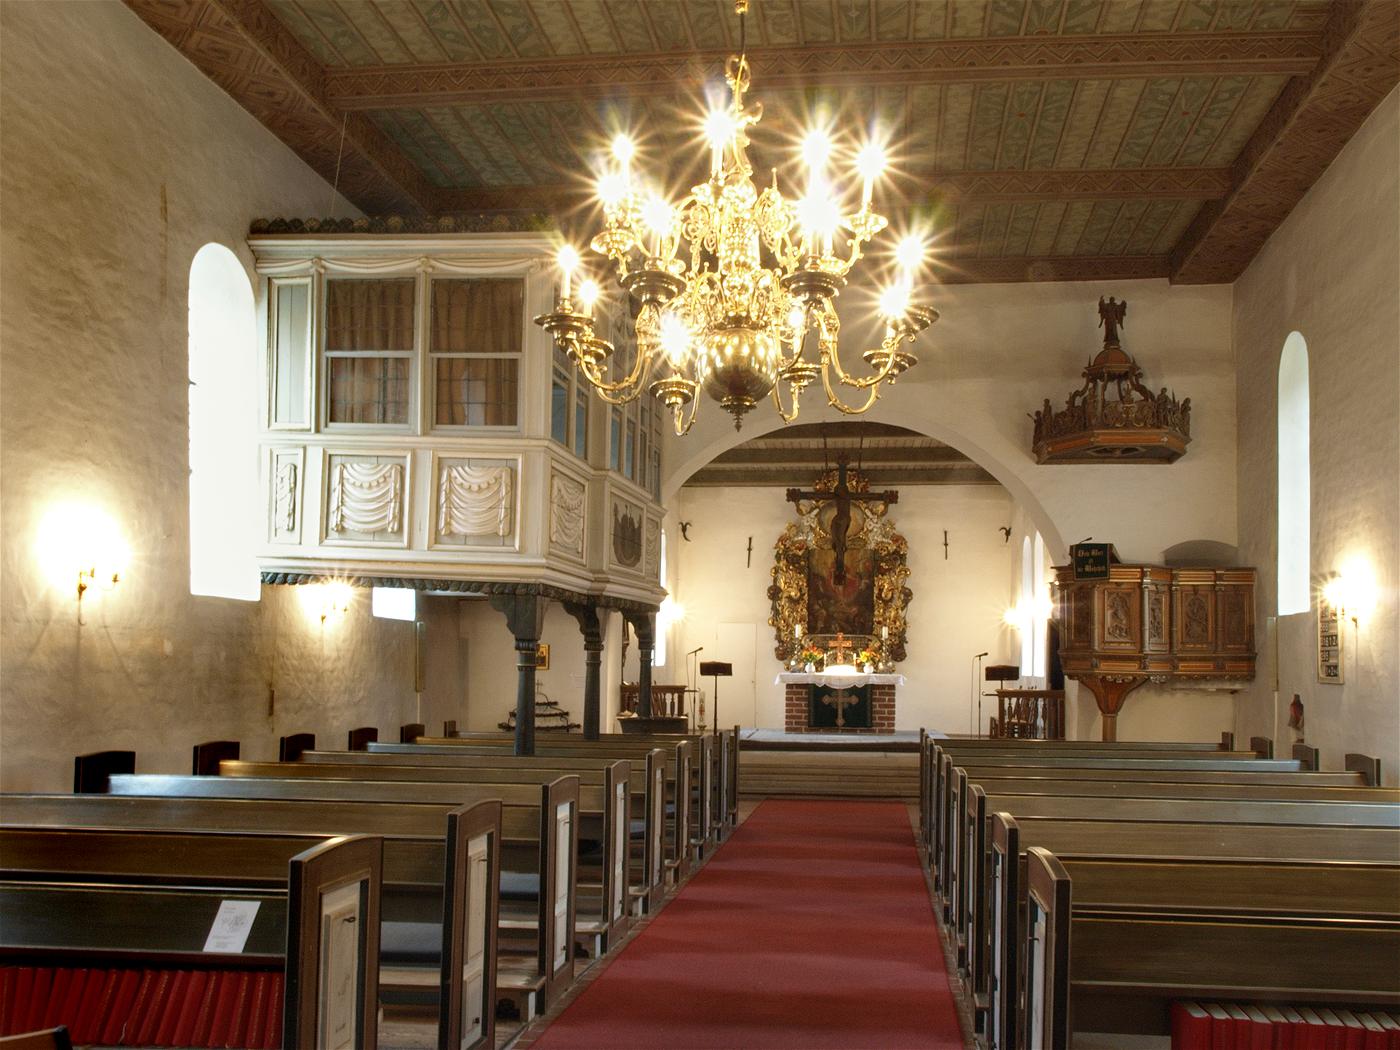 Kirche Haseldorf